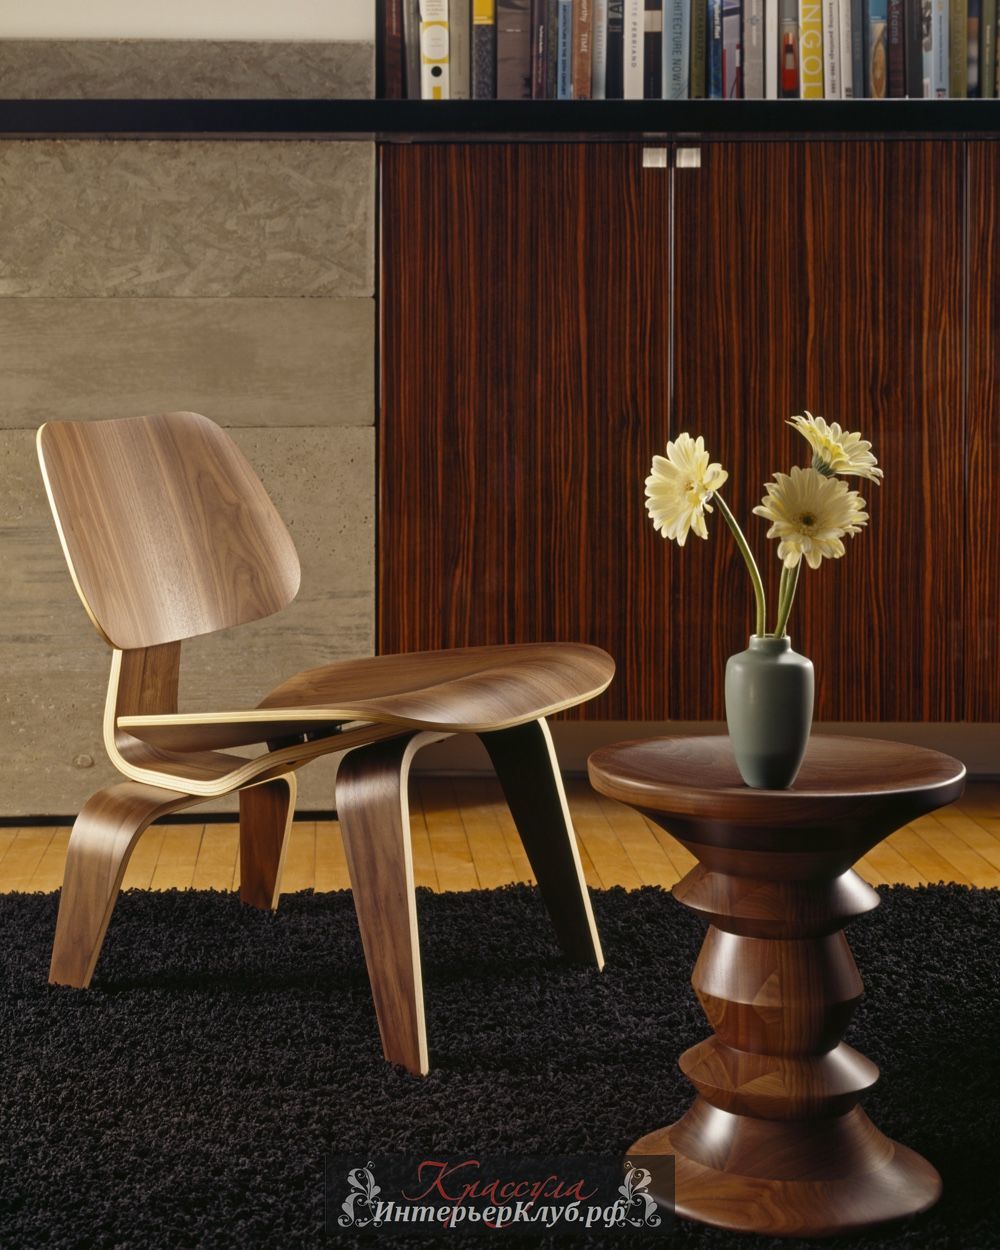 4 Стул LCW (Lounge Chair Wood). лучший дизайн 20 века по версии Тайм. Разработан Чарльзом и Рэй Имз в 1945 году, Eames-Molded-Plywood-Chair-